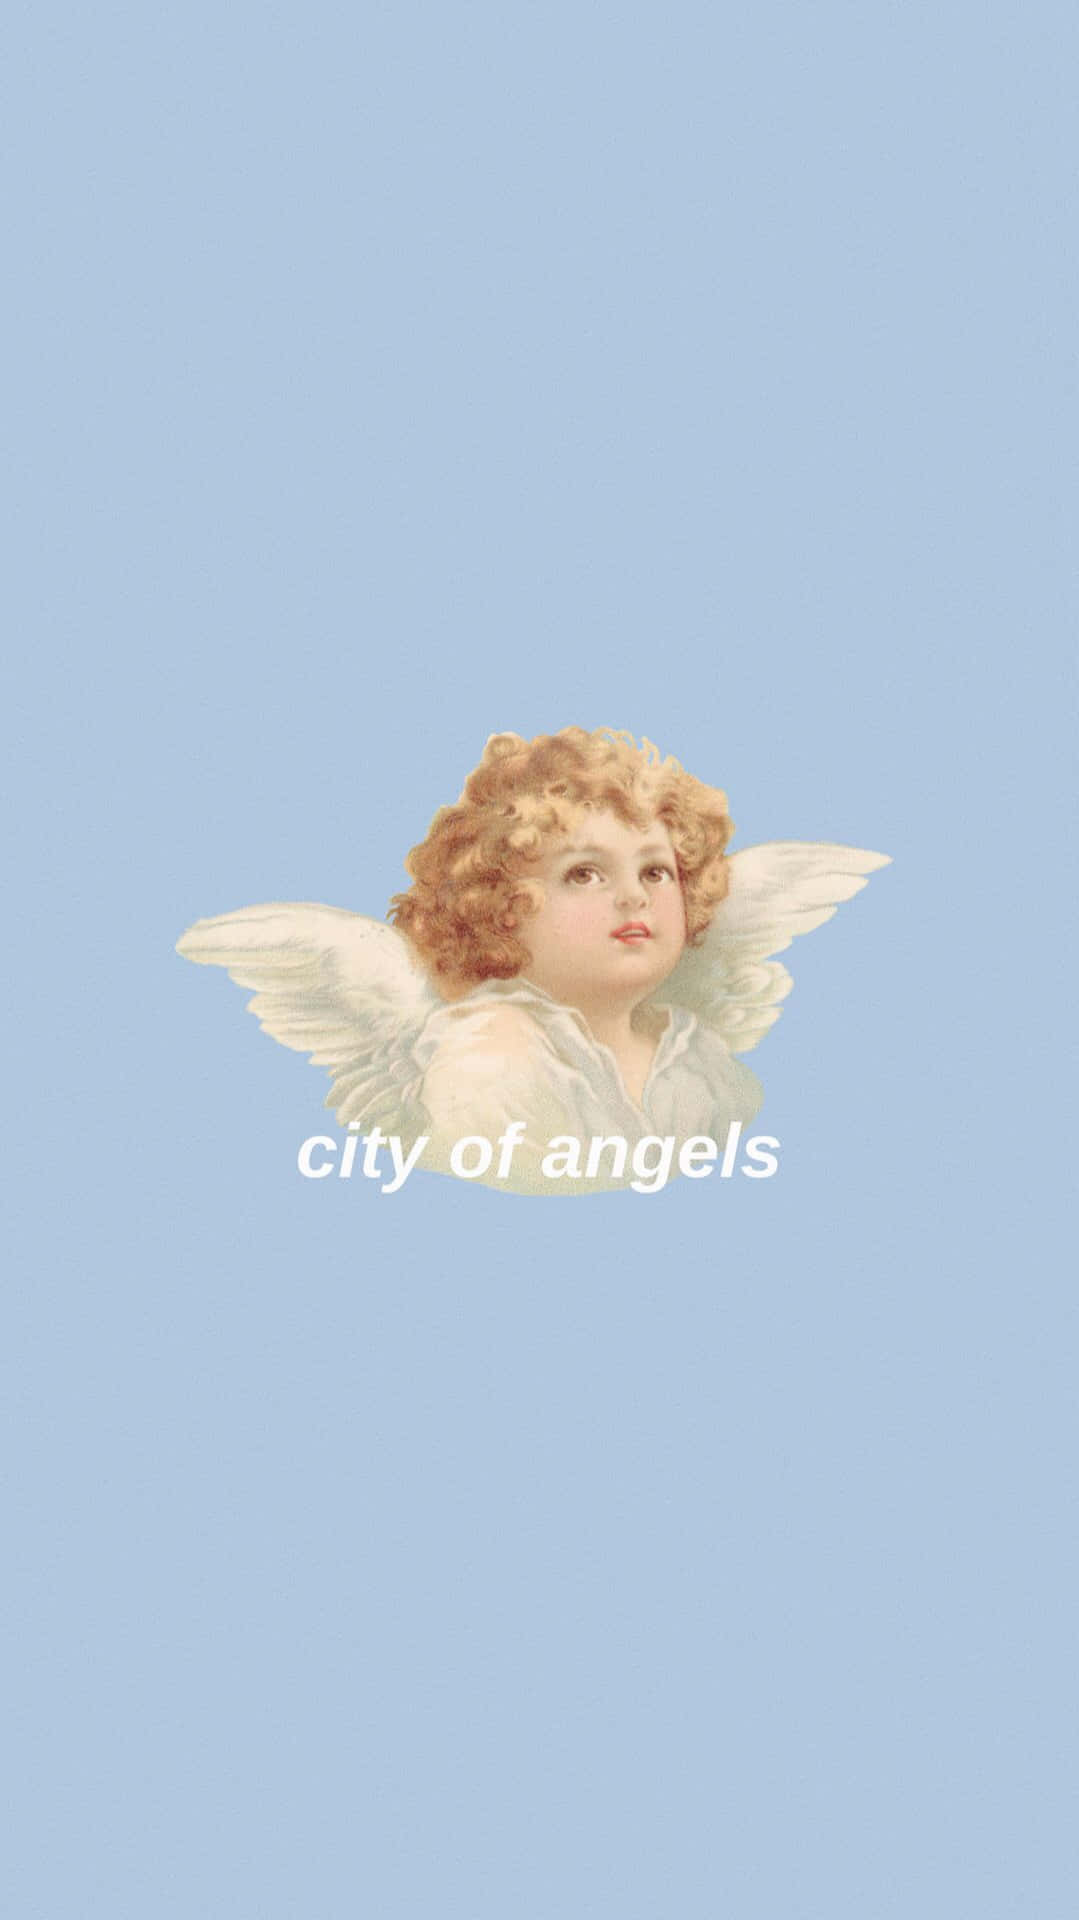 Vintage Angel Aesthetic Cityof Angels Wallpaper